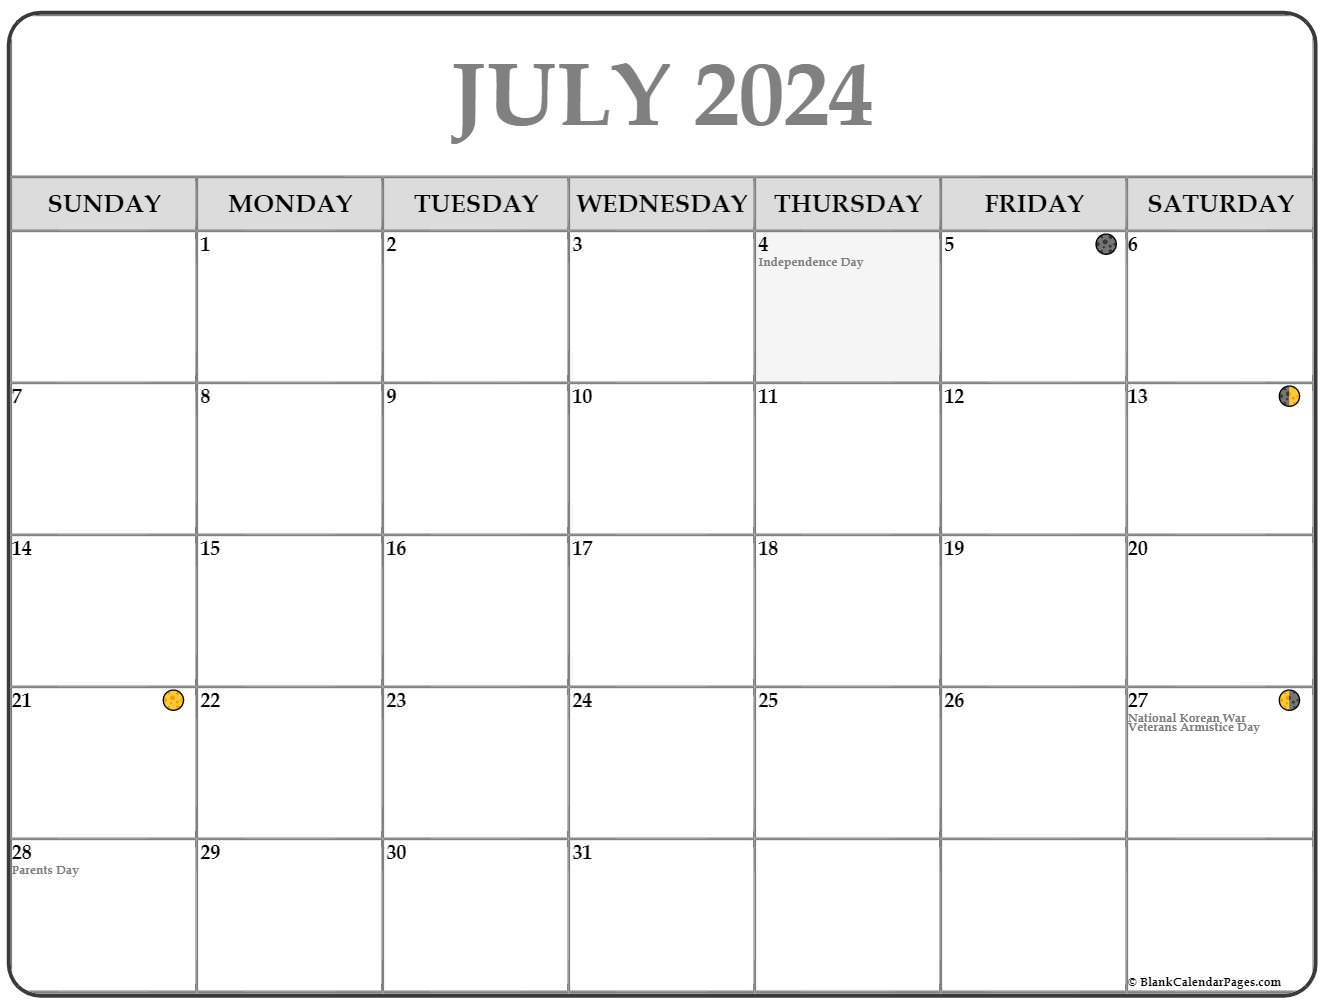 July 2024 Lunar Calendar | Moon Phase Calendar for Moon July 2024 Calendar